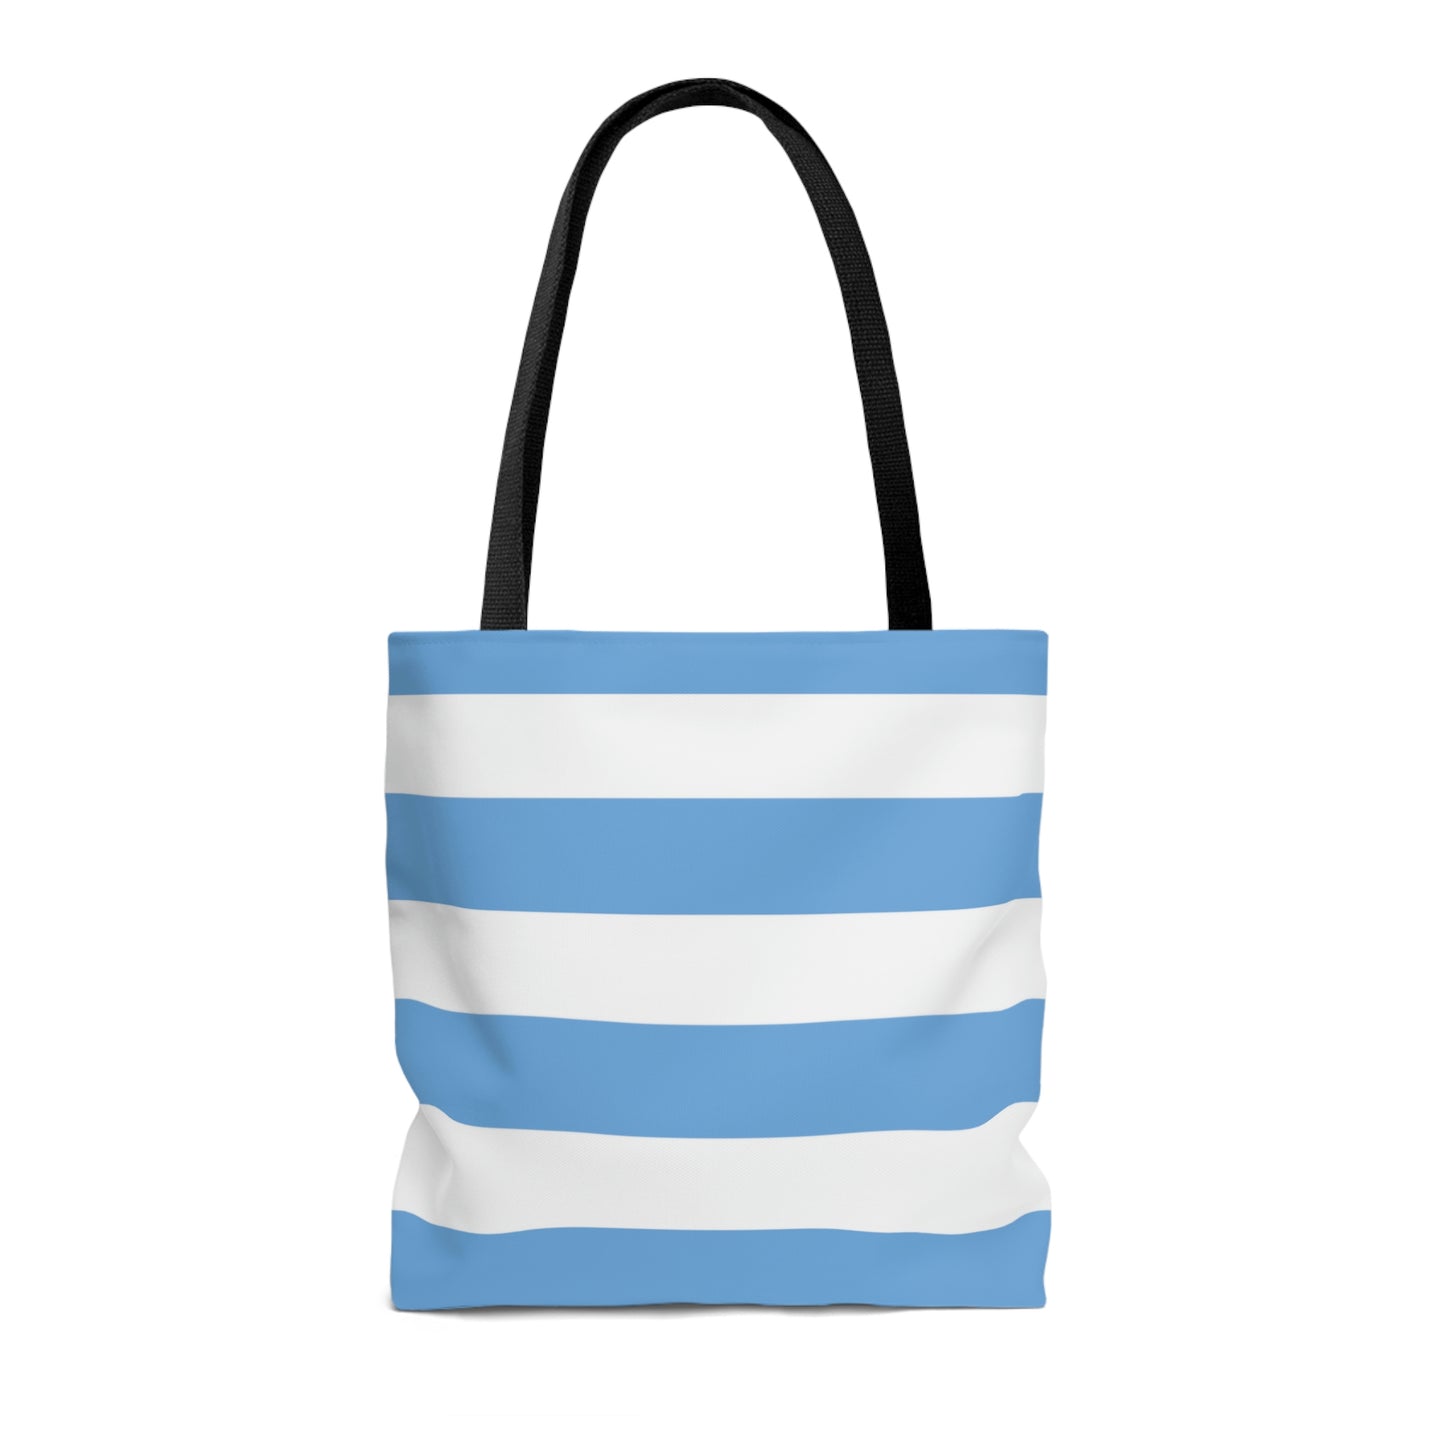 Lightweight Tote Bag - Light Blue/White Stripes